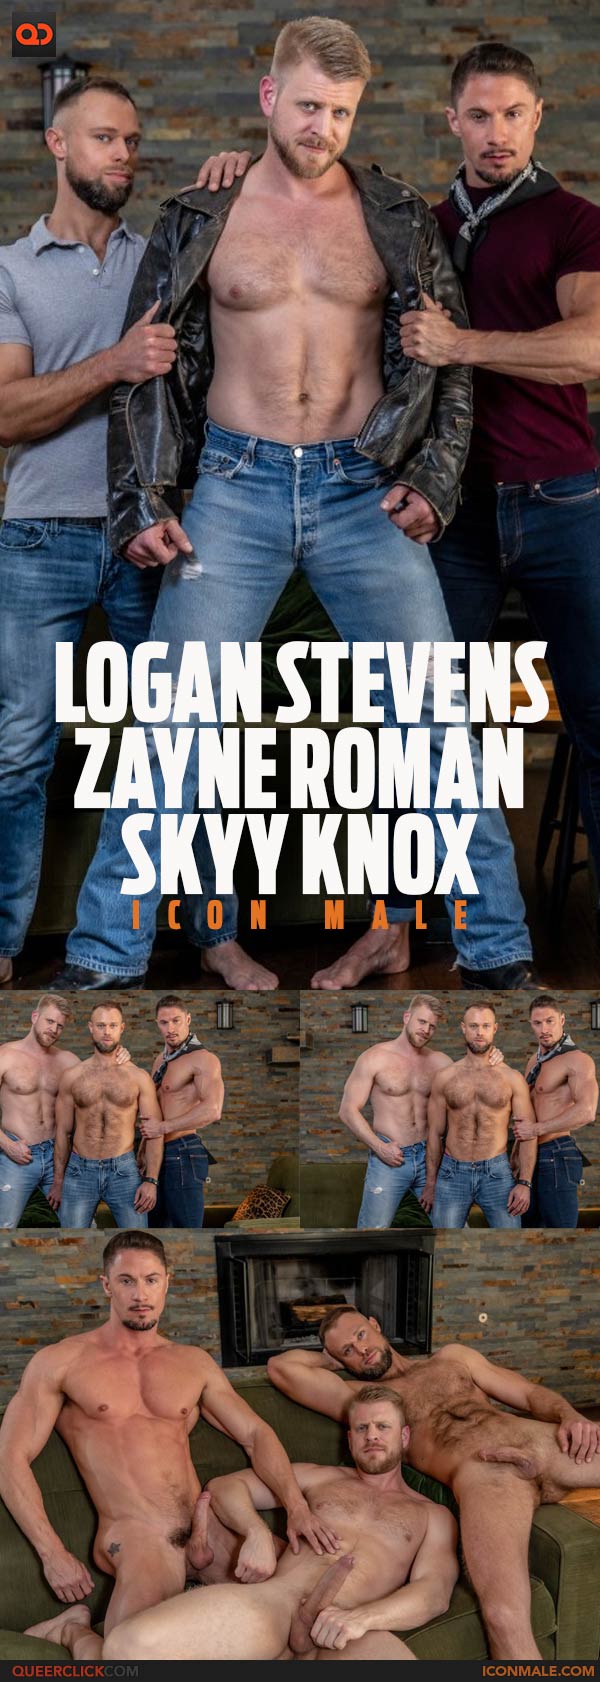 IconMale: Skyy Knox, Zayne Roman and Logan Stevens